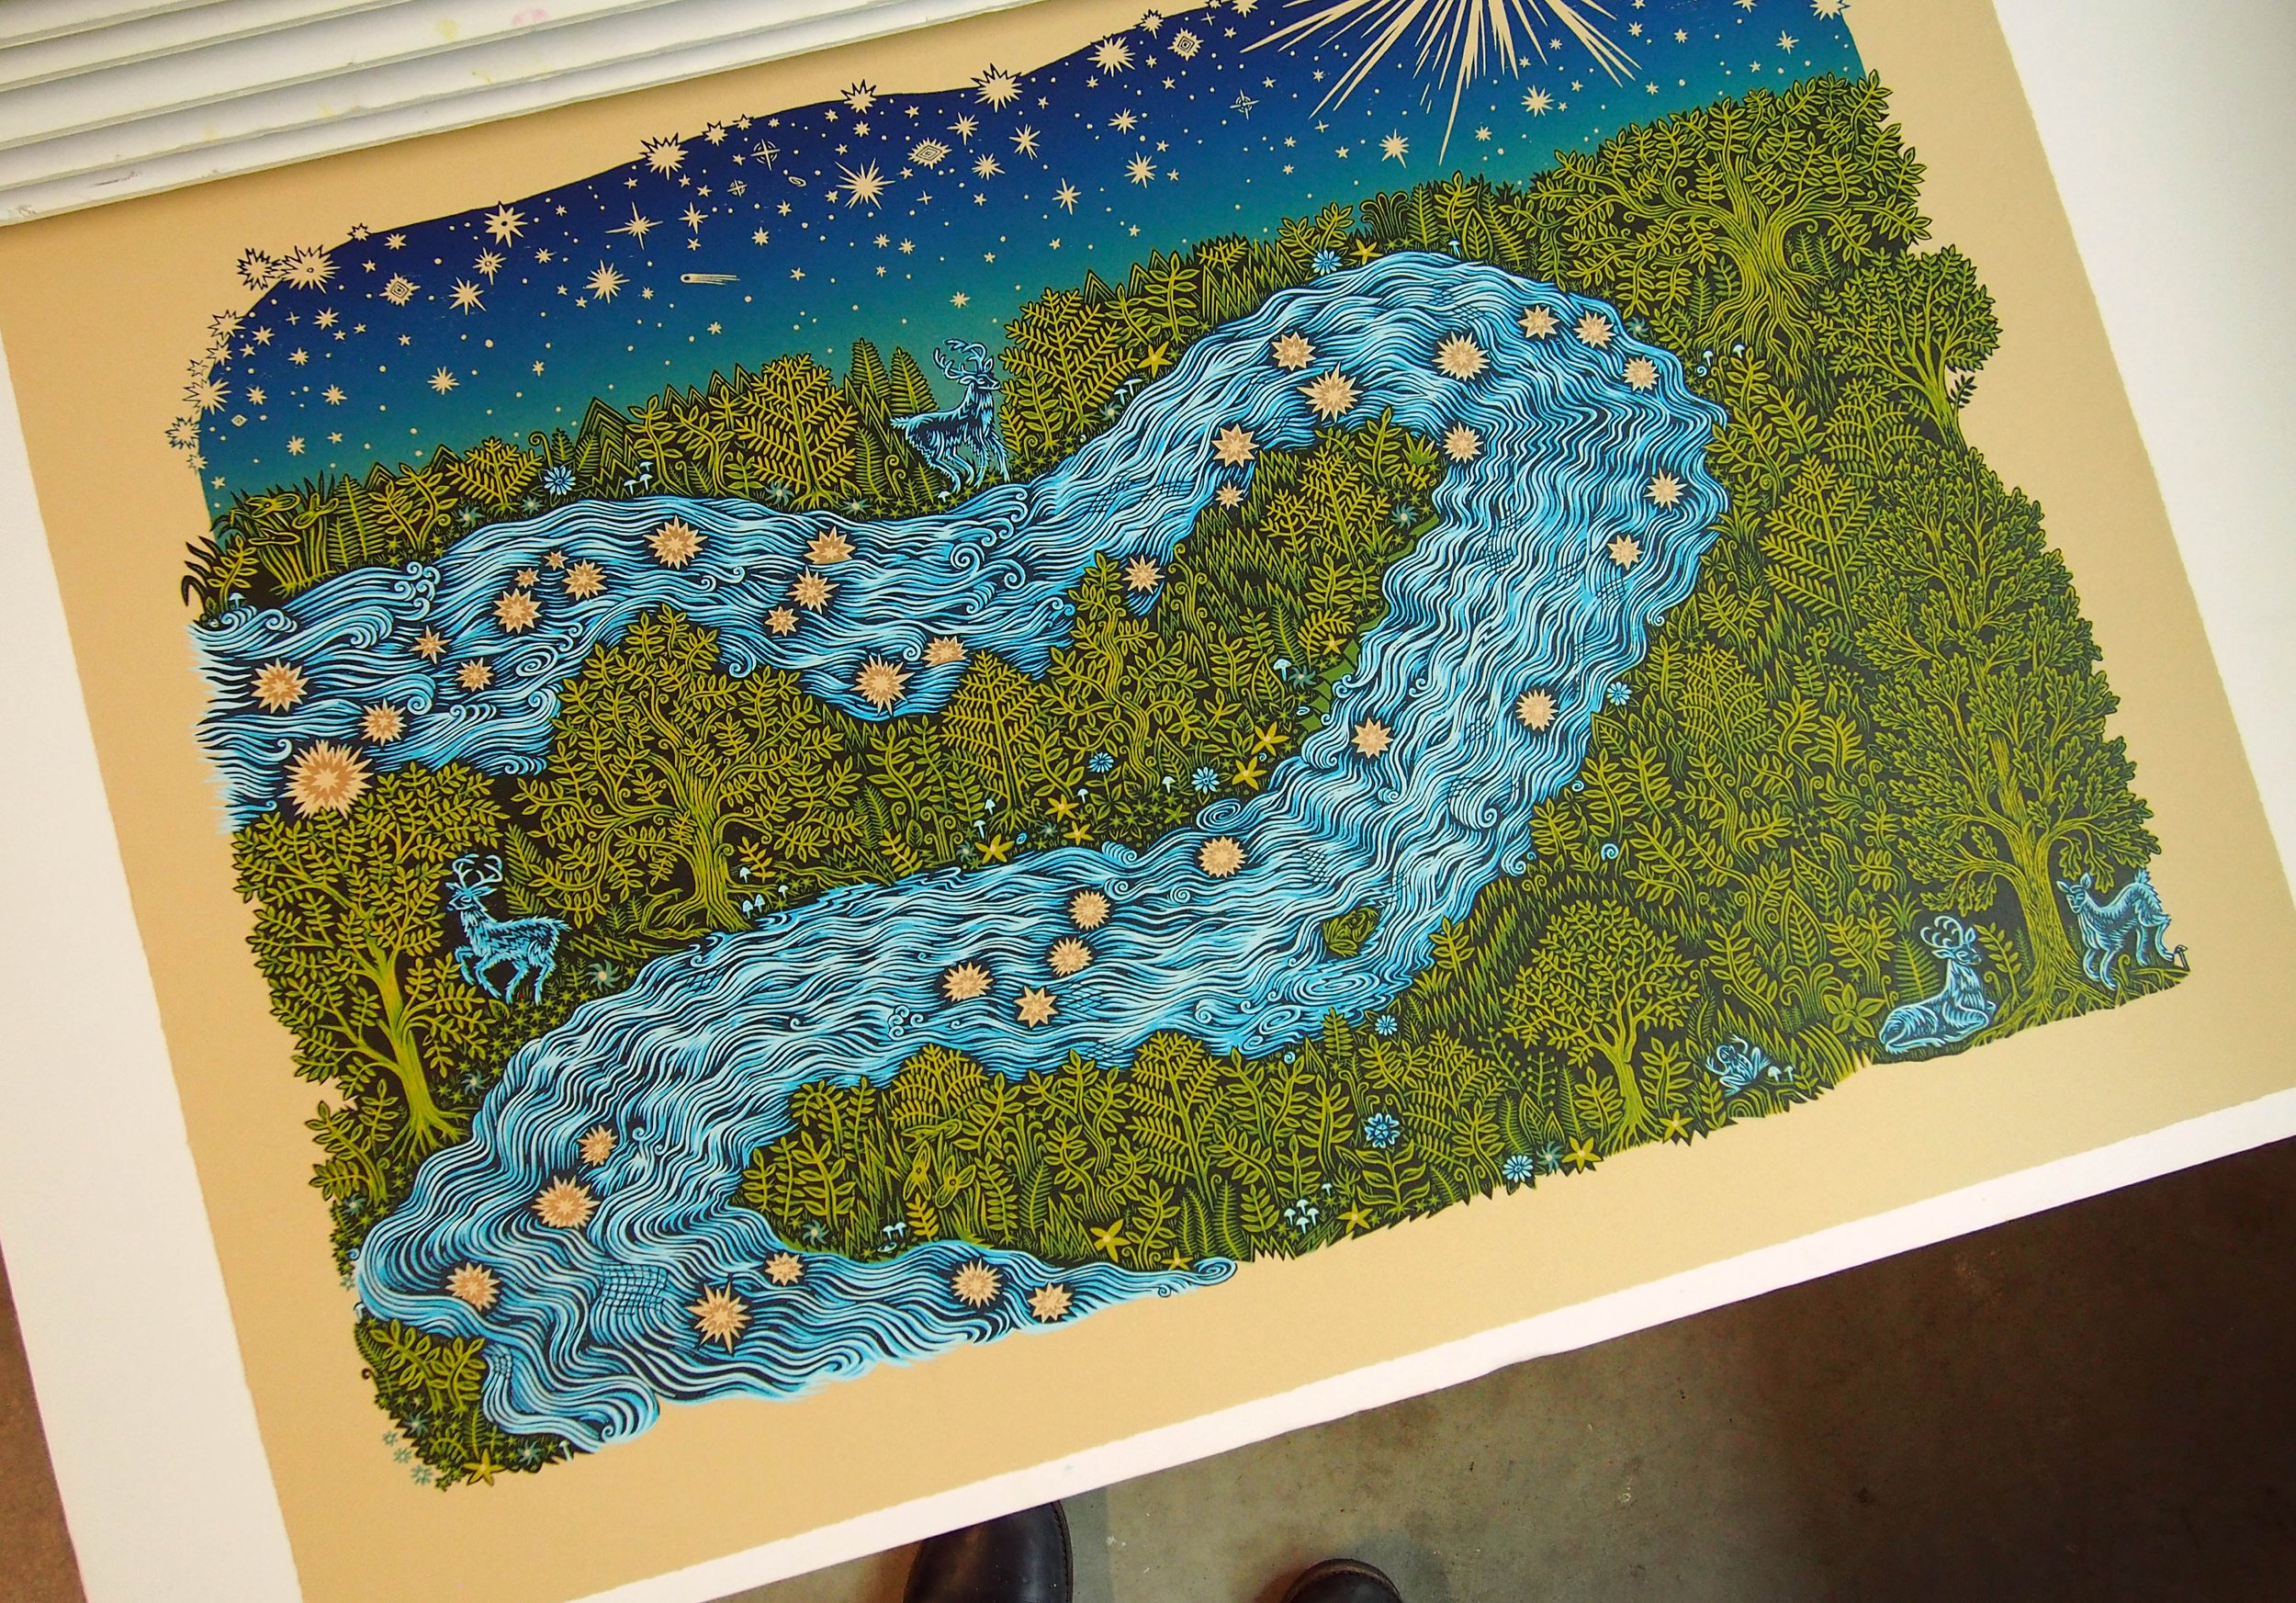 Poki Claw Art Board Print for Sale by CassidyRey